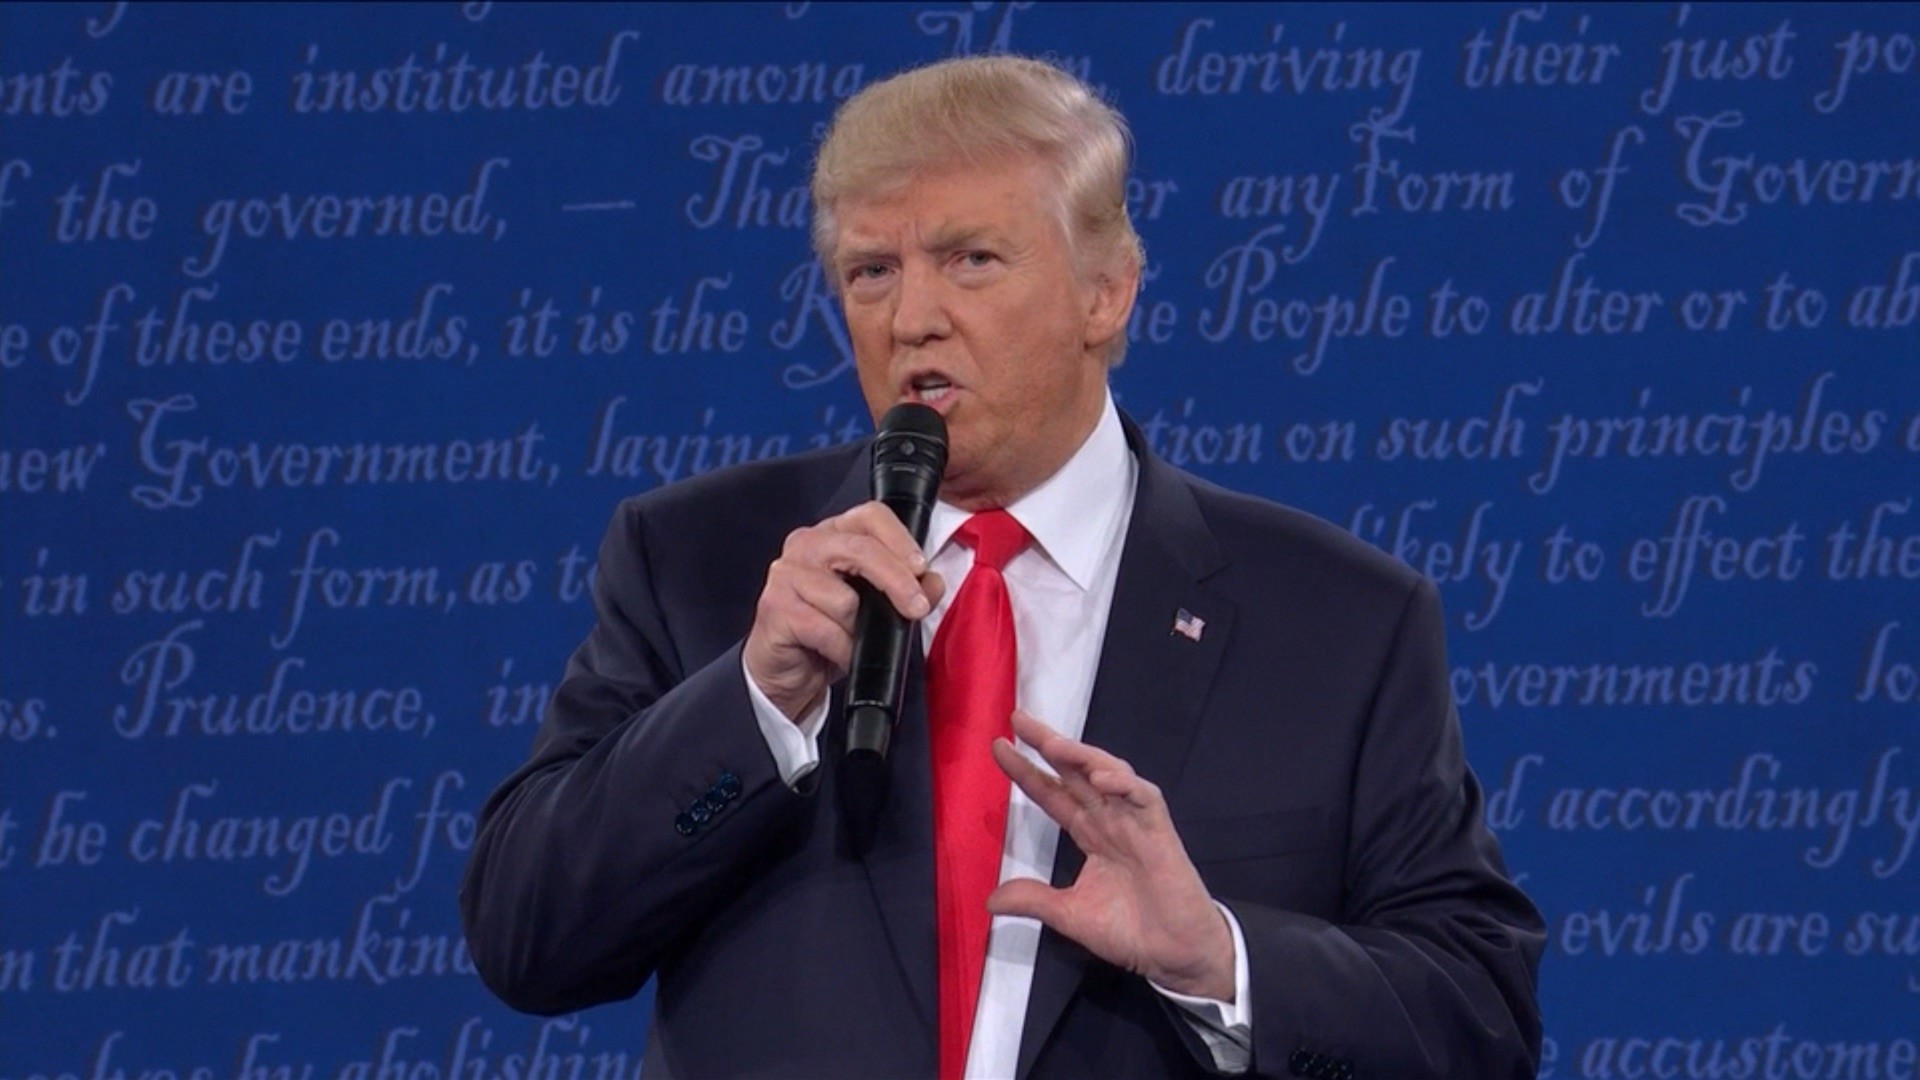 At second debate, Donald Trump accuses Bill Clinton of abusing women – The Washington Post